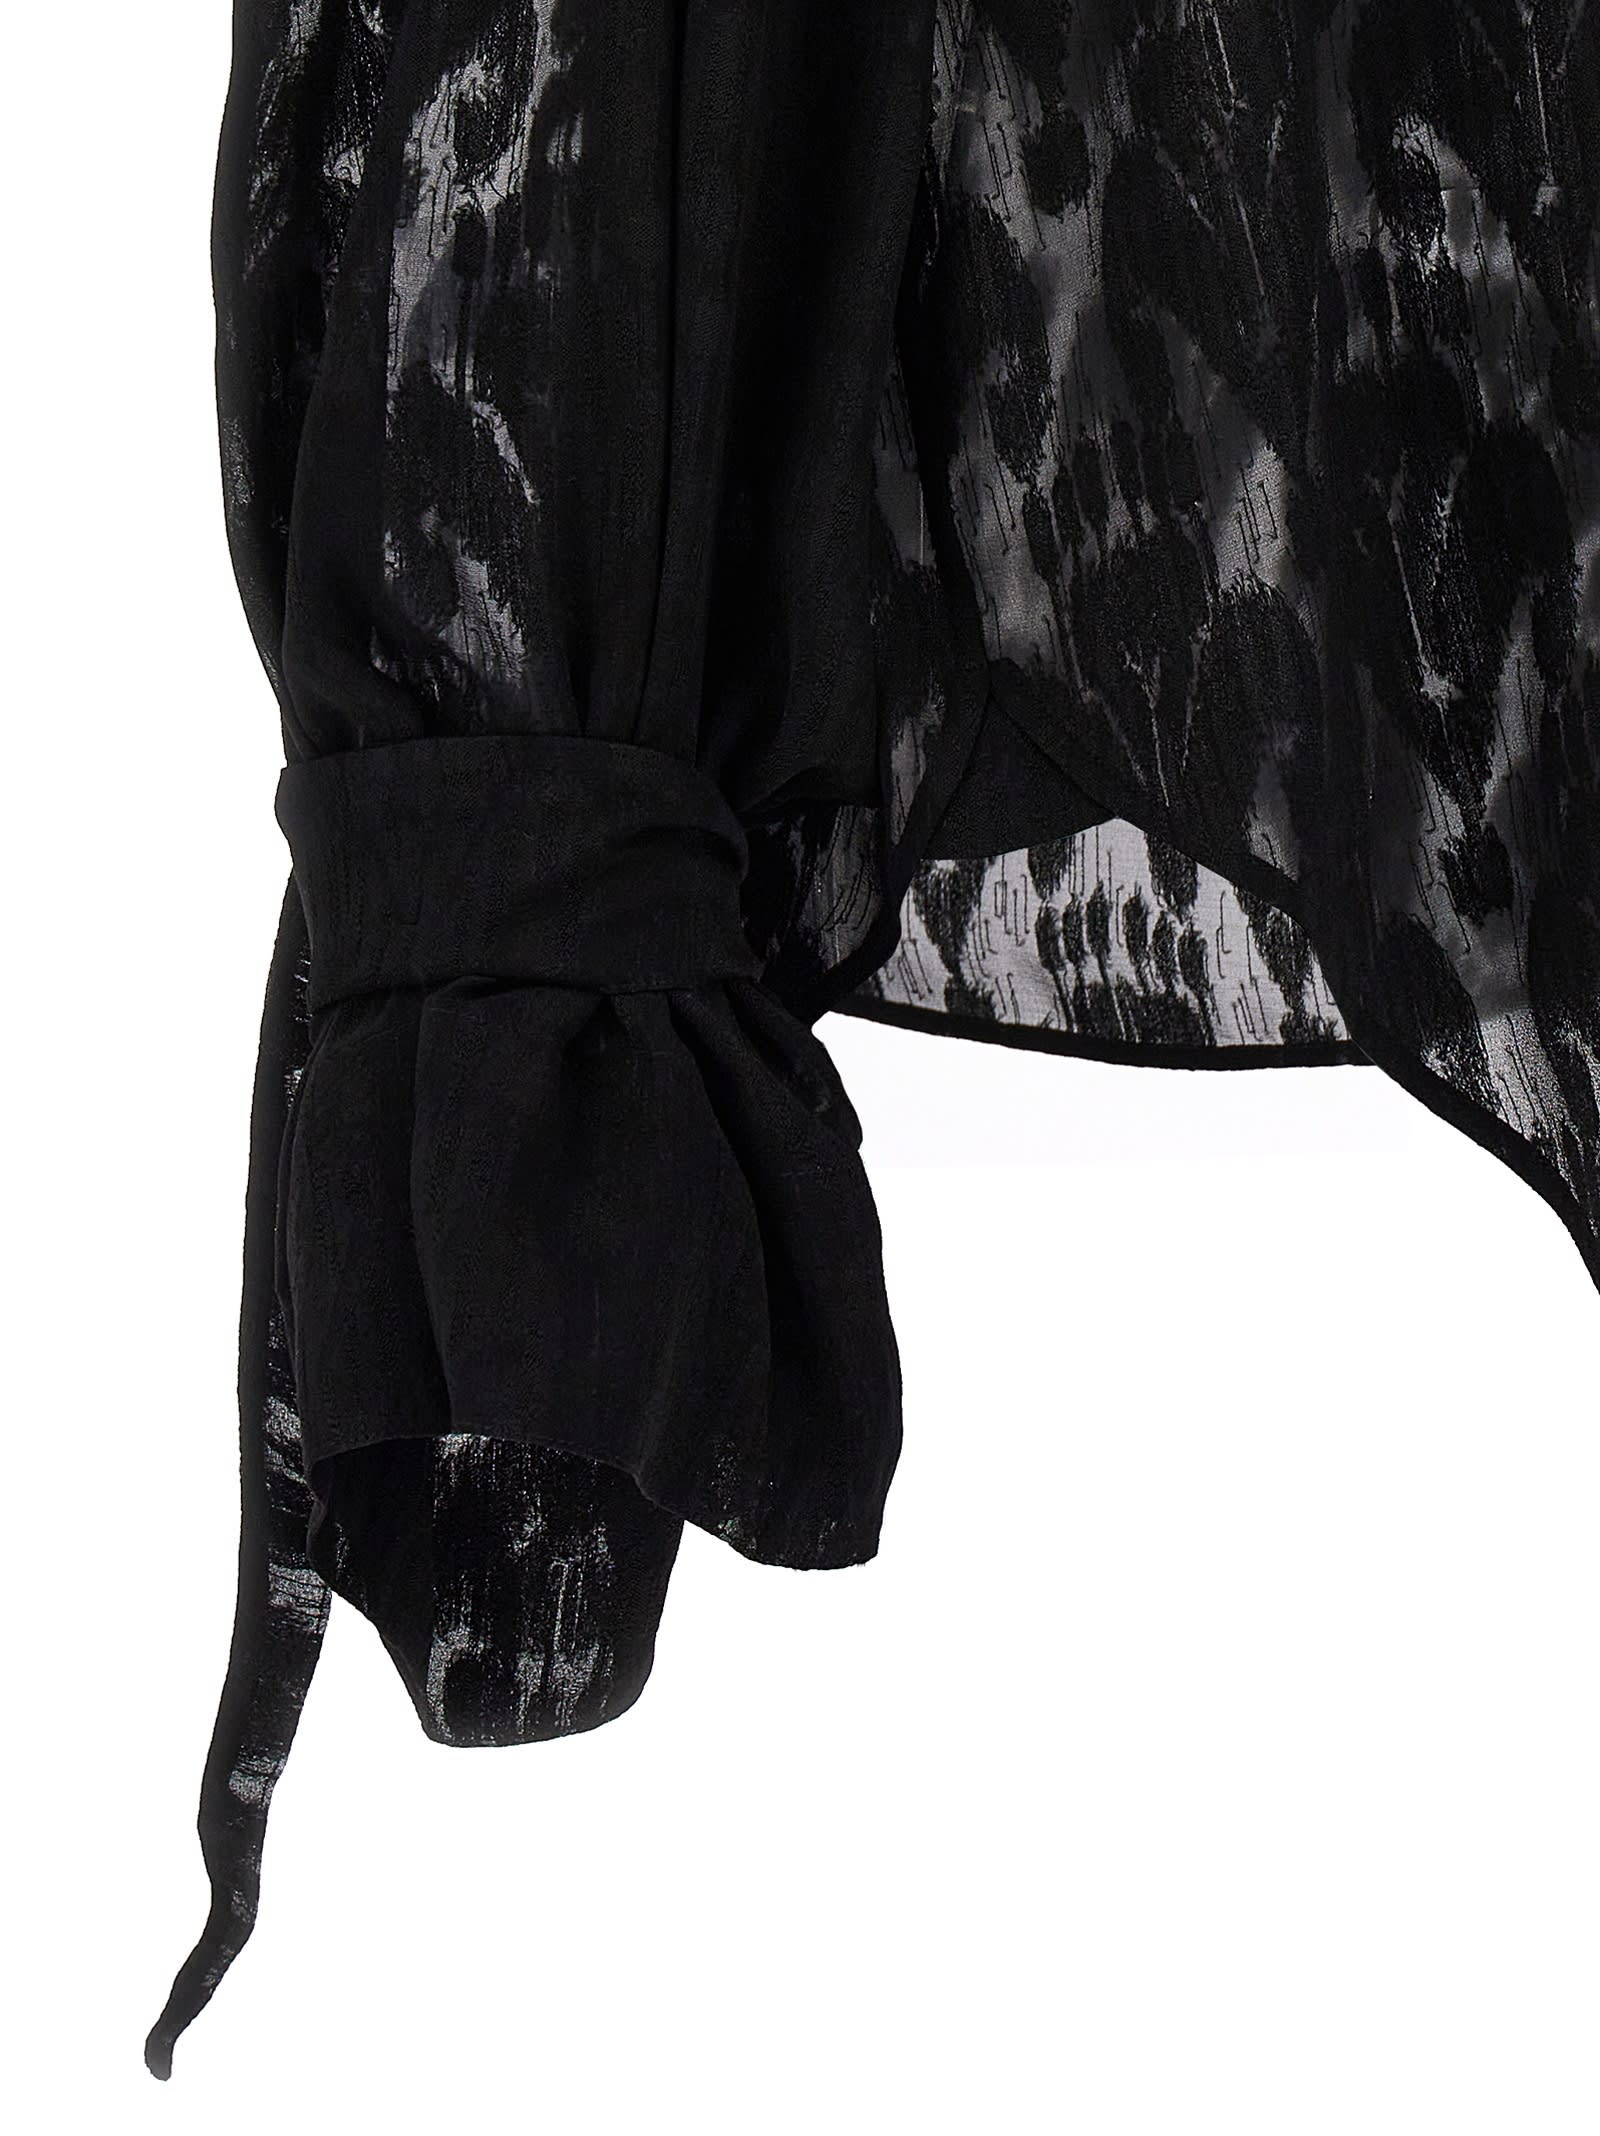 Shop Saint Laurent Transparent Silk Pattern Shirt. In Black